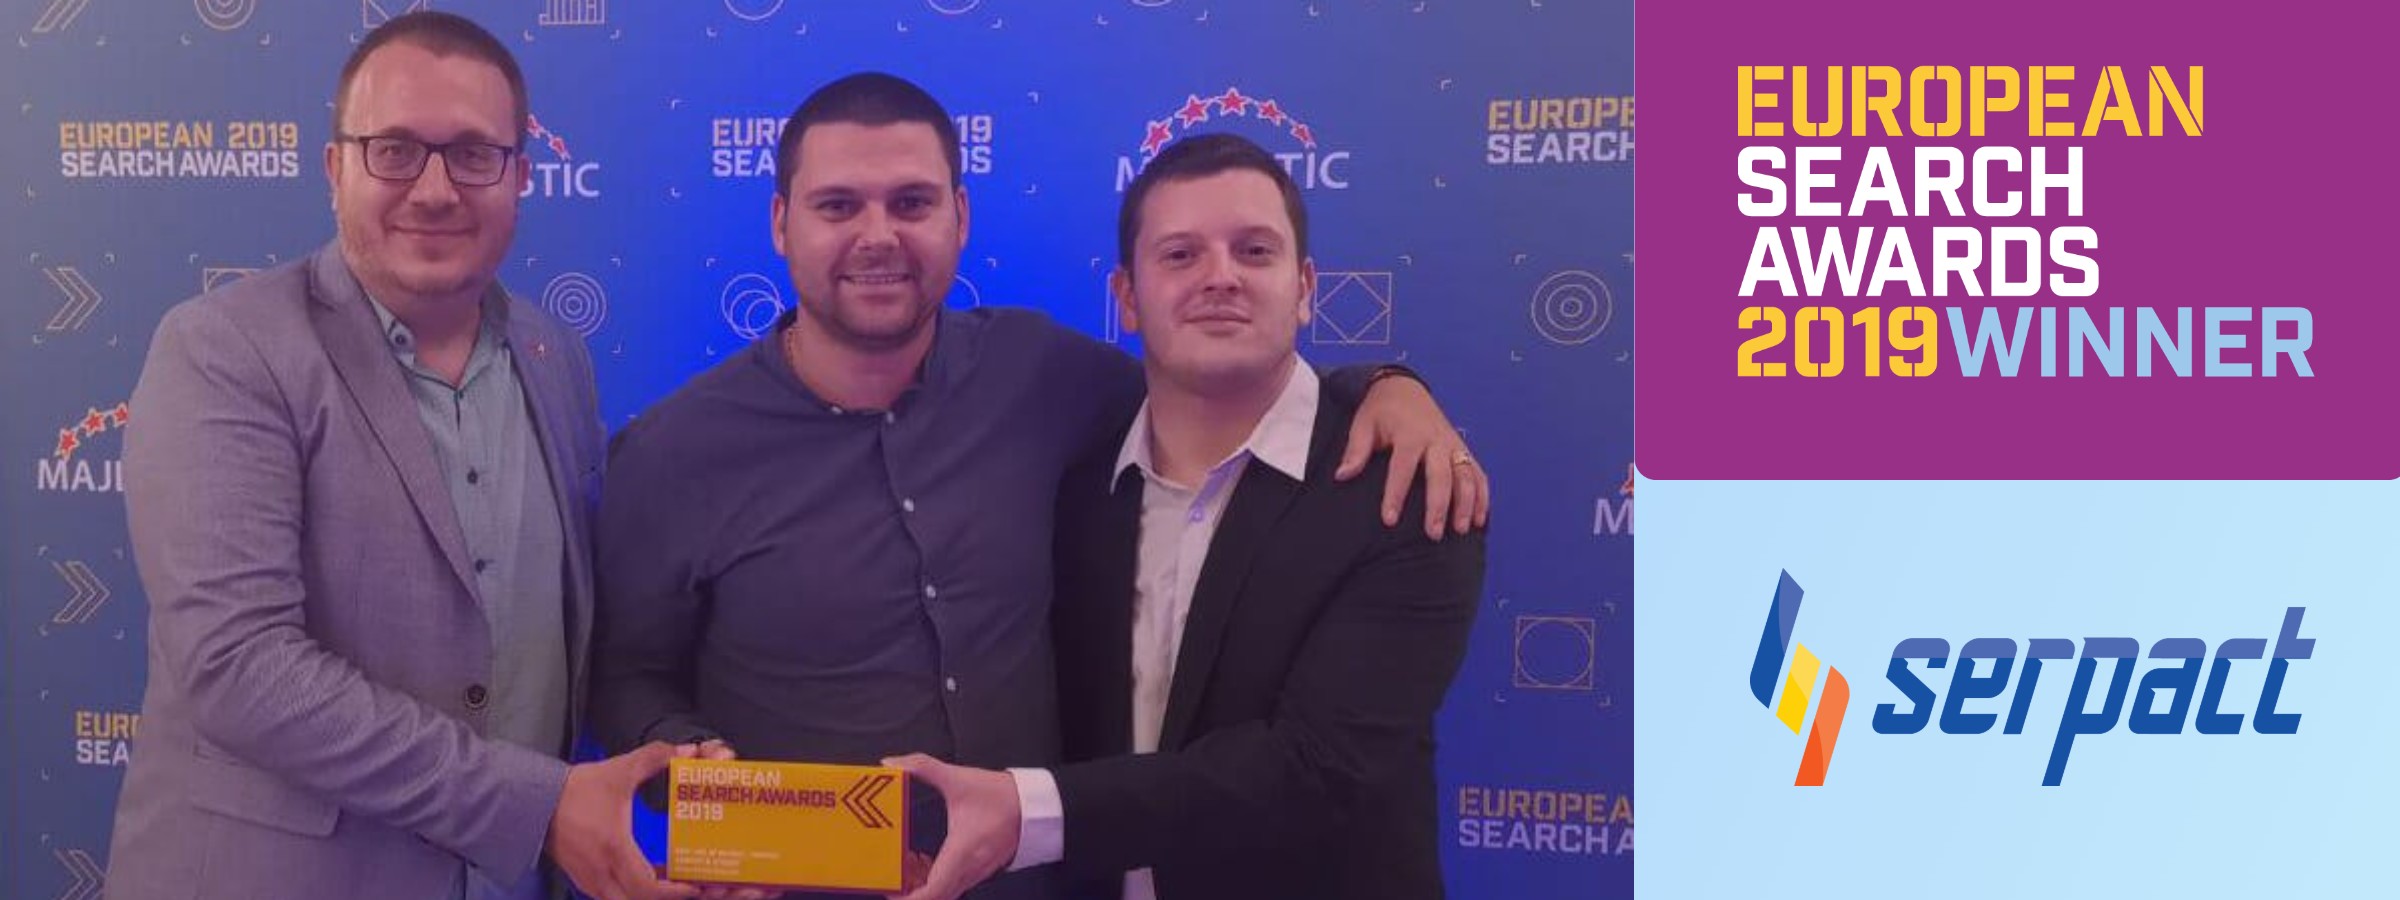 Serpact won European Search Awards 2019 – Gaming Category